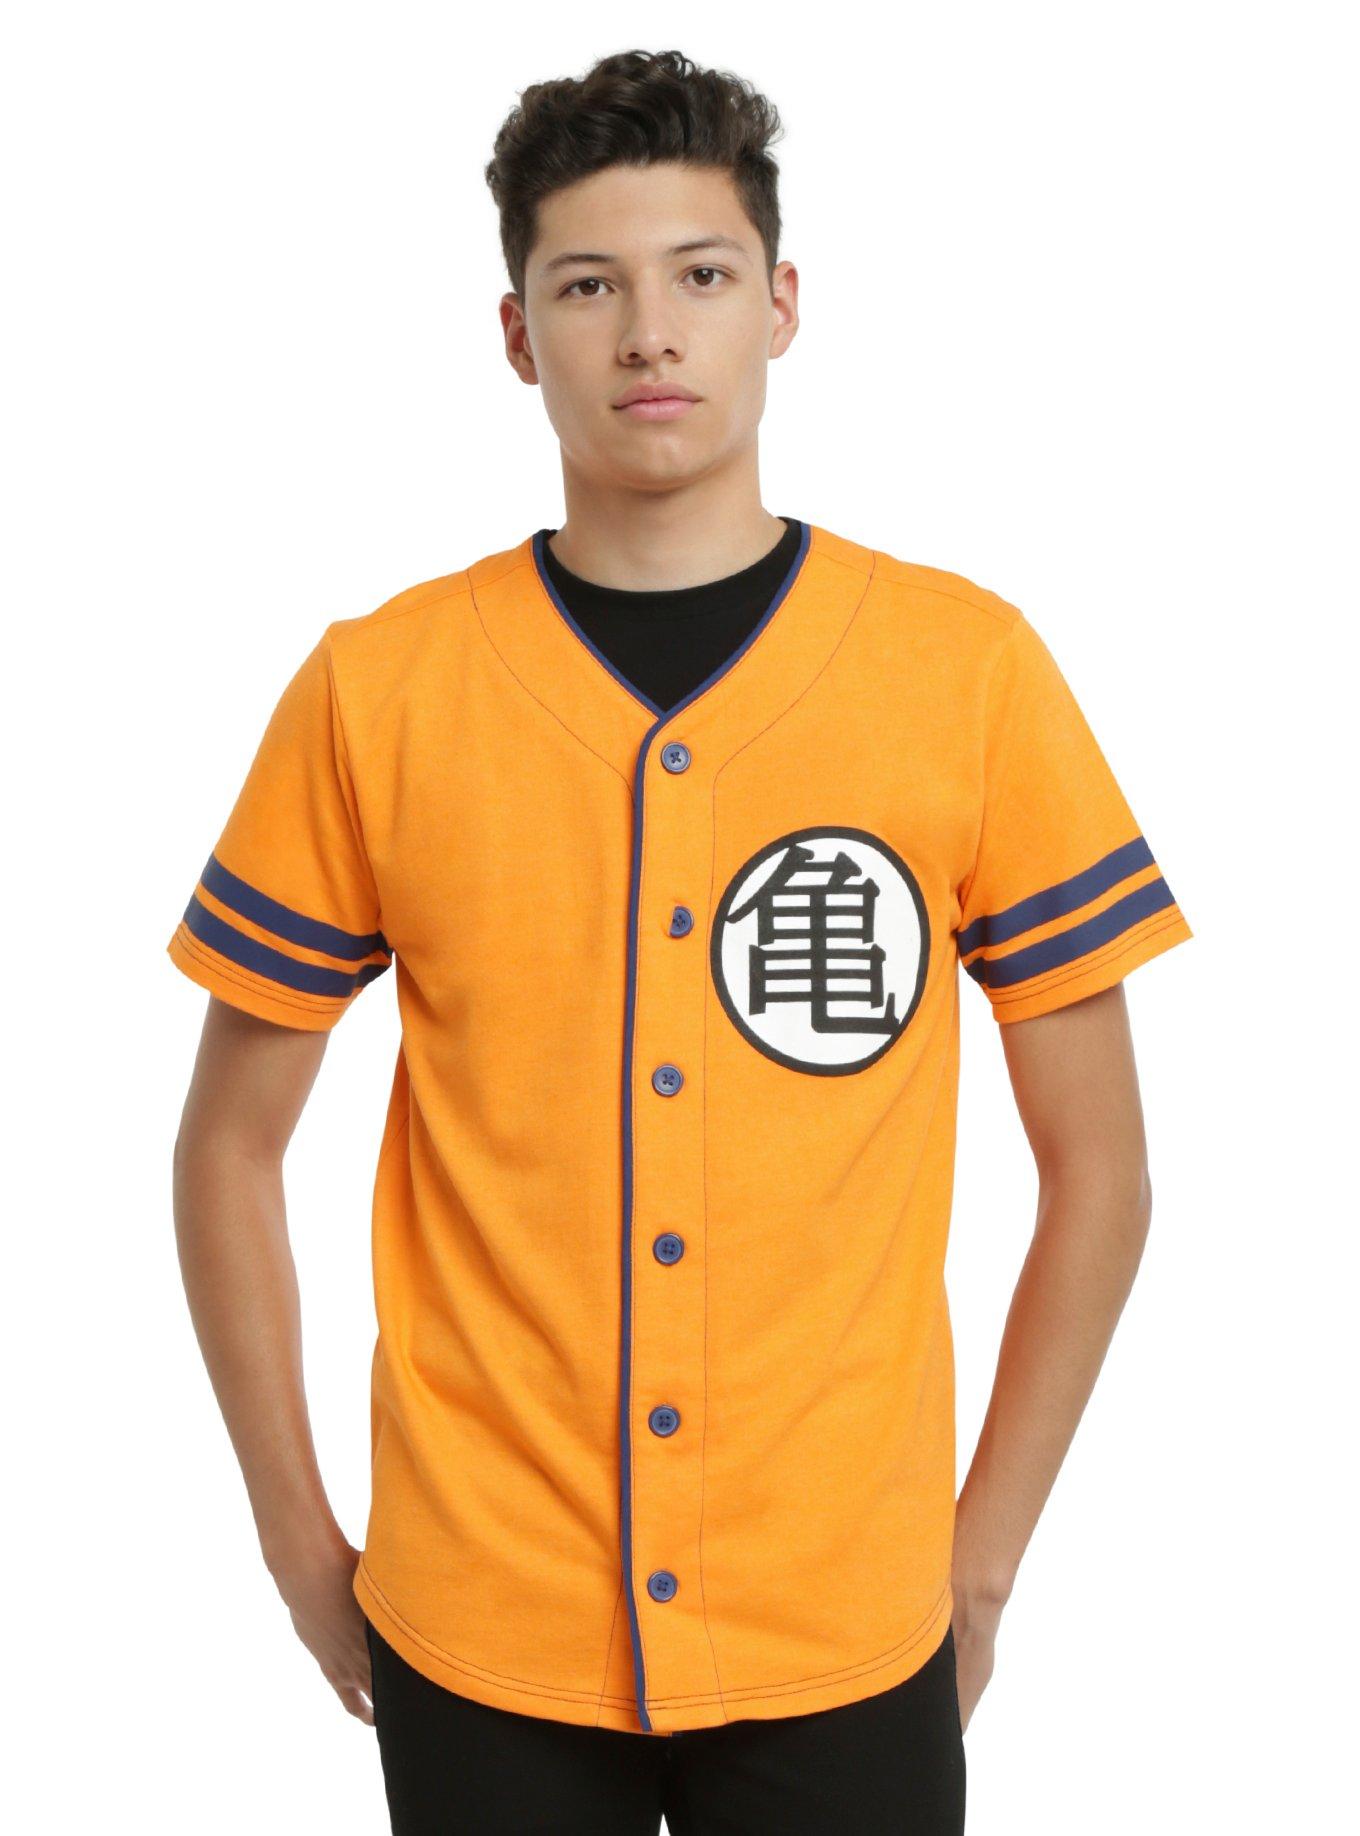 Boston Red Sox Son Goku Dragon Ball Baseball Jersey -   Worldwide Shipping